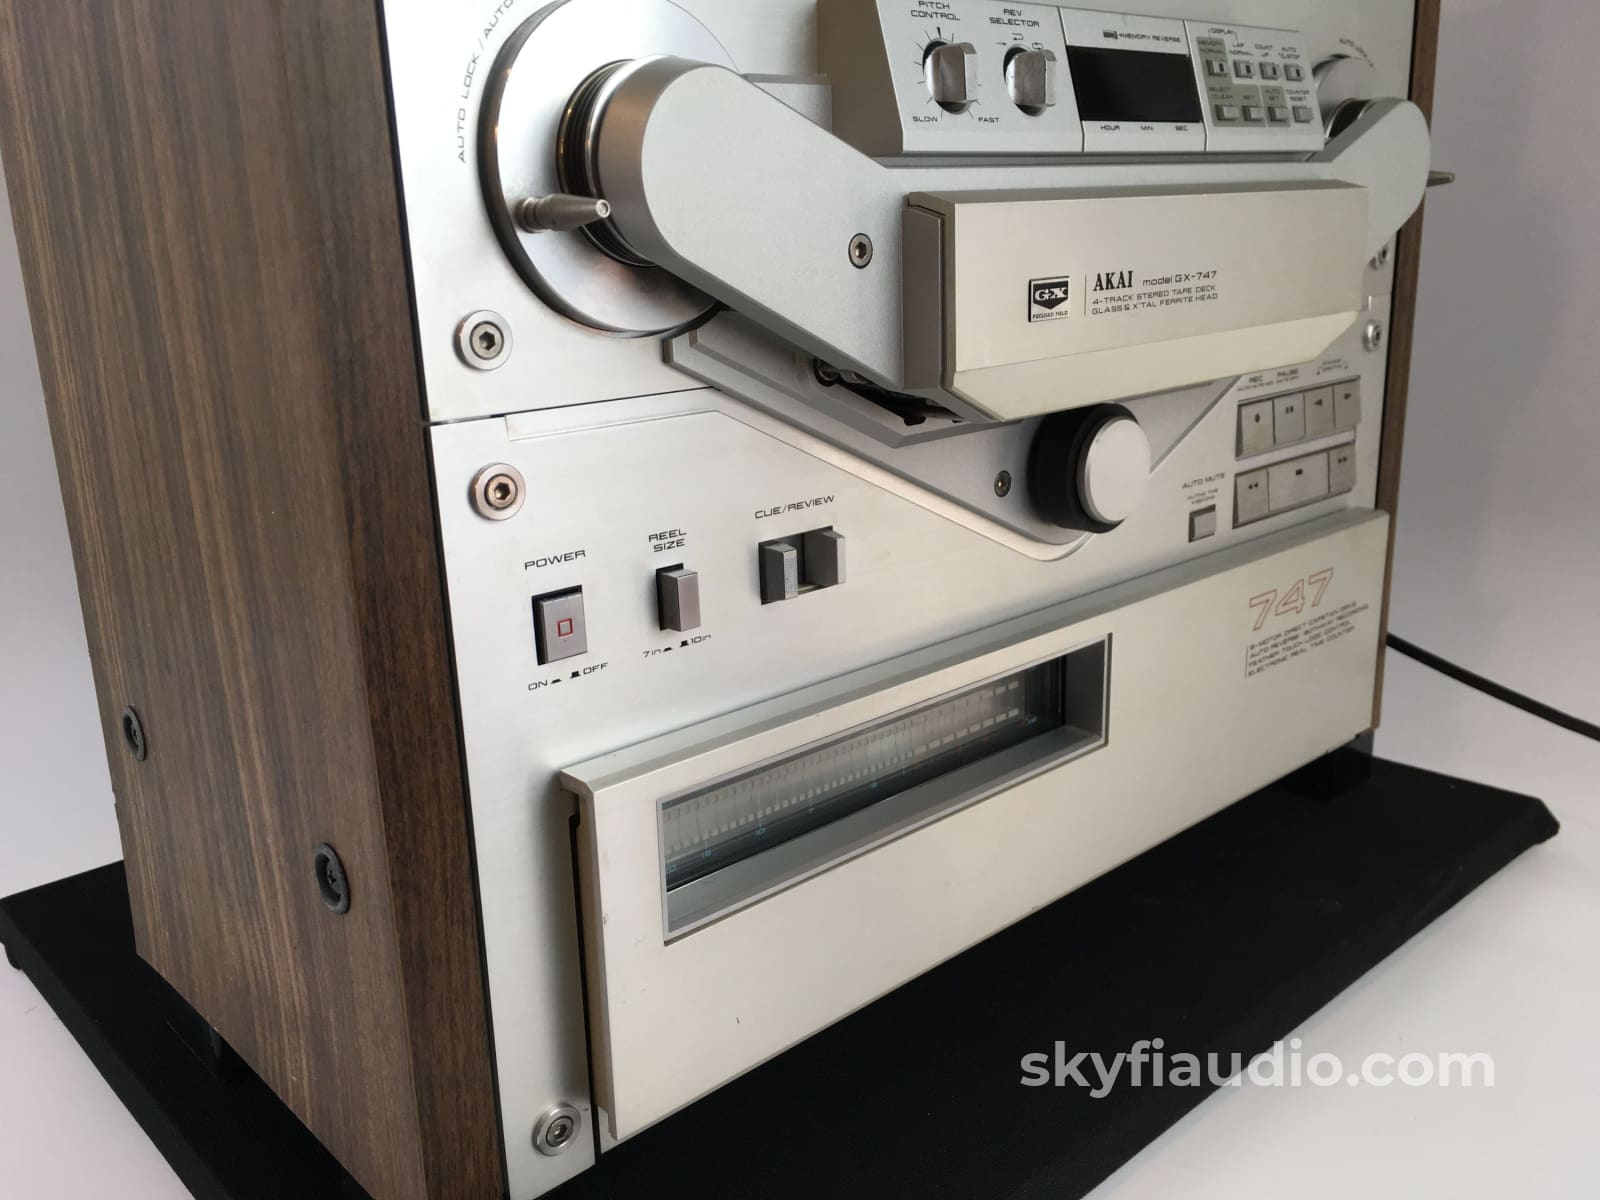 NEAR MINT AKAI R-7MH 7 Metal Takeup Reel to Reel Tape Recorder w/Box  GX-747 646